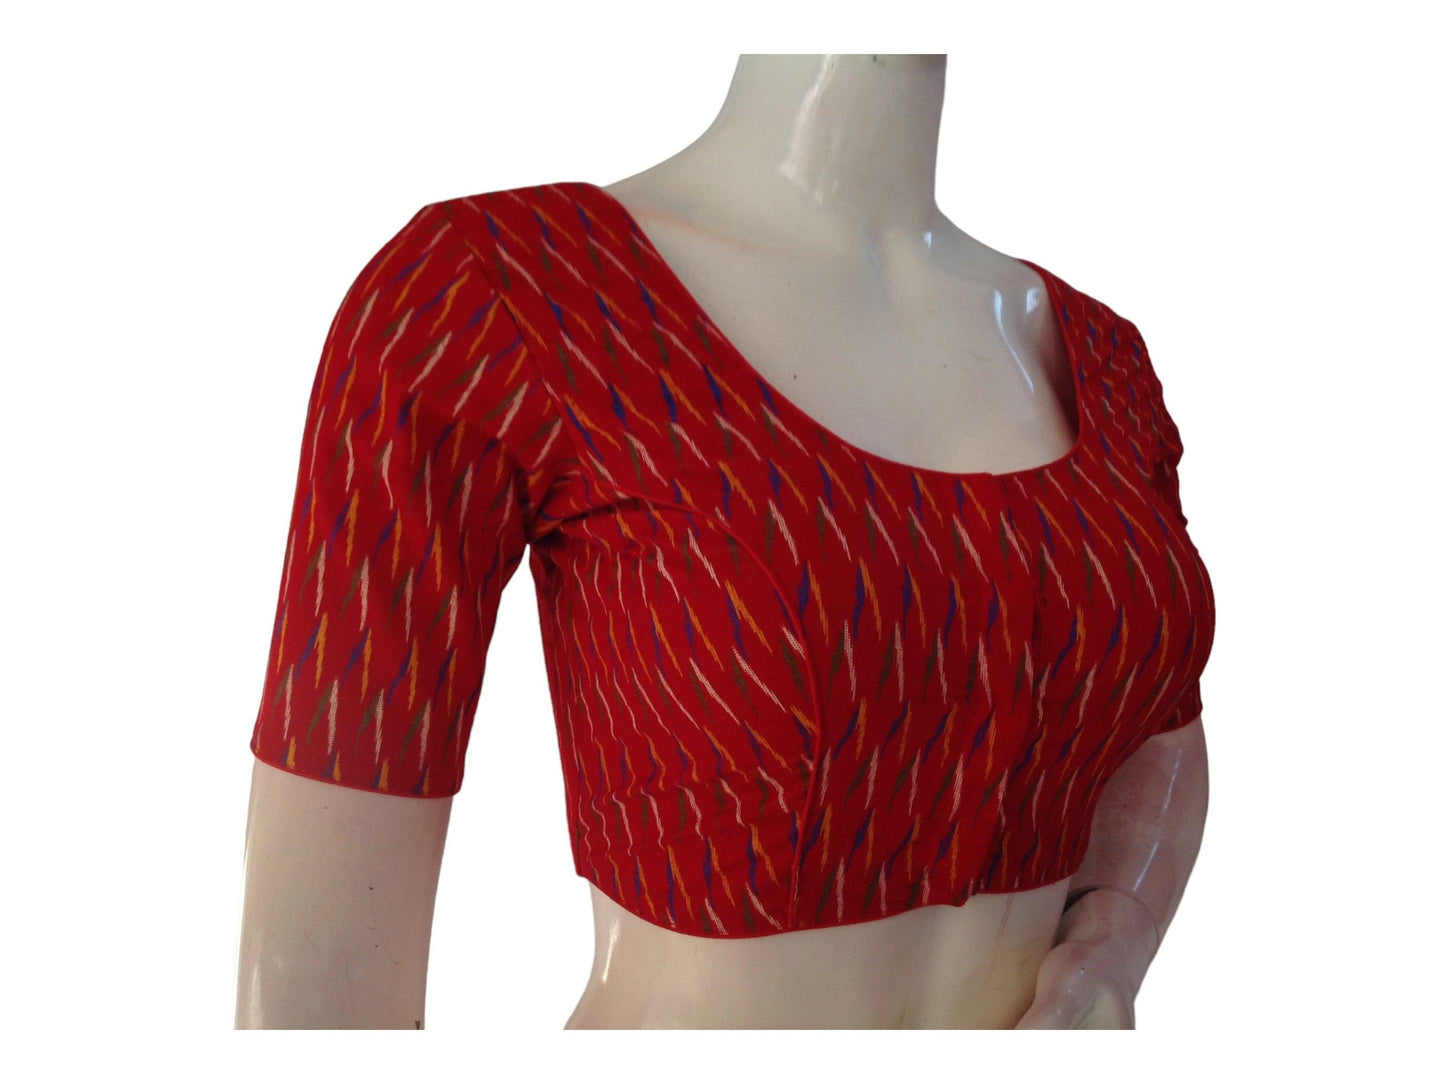 Red Saree Bouse, Cotton Readymade blouse, Trendy Indian Saree Choli top, Plus Size Blouse